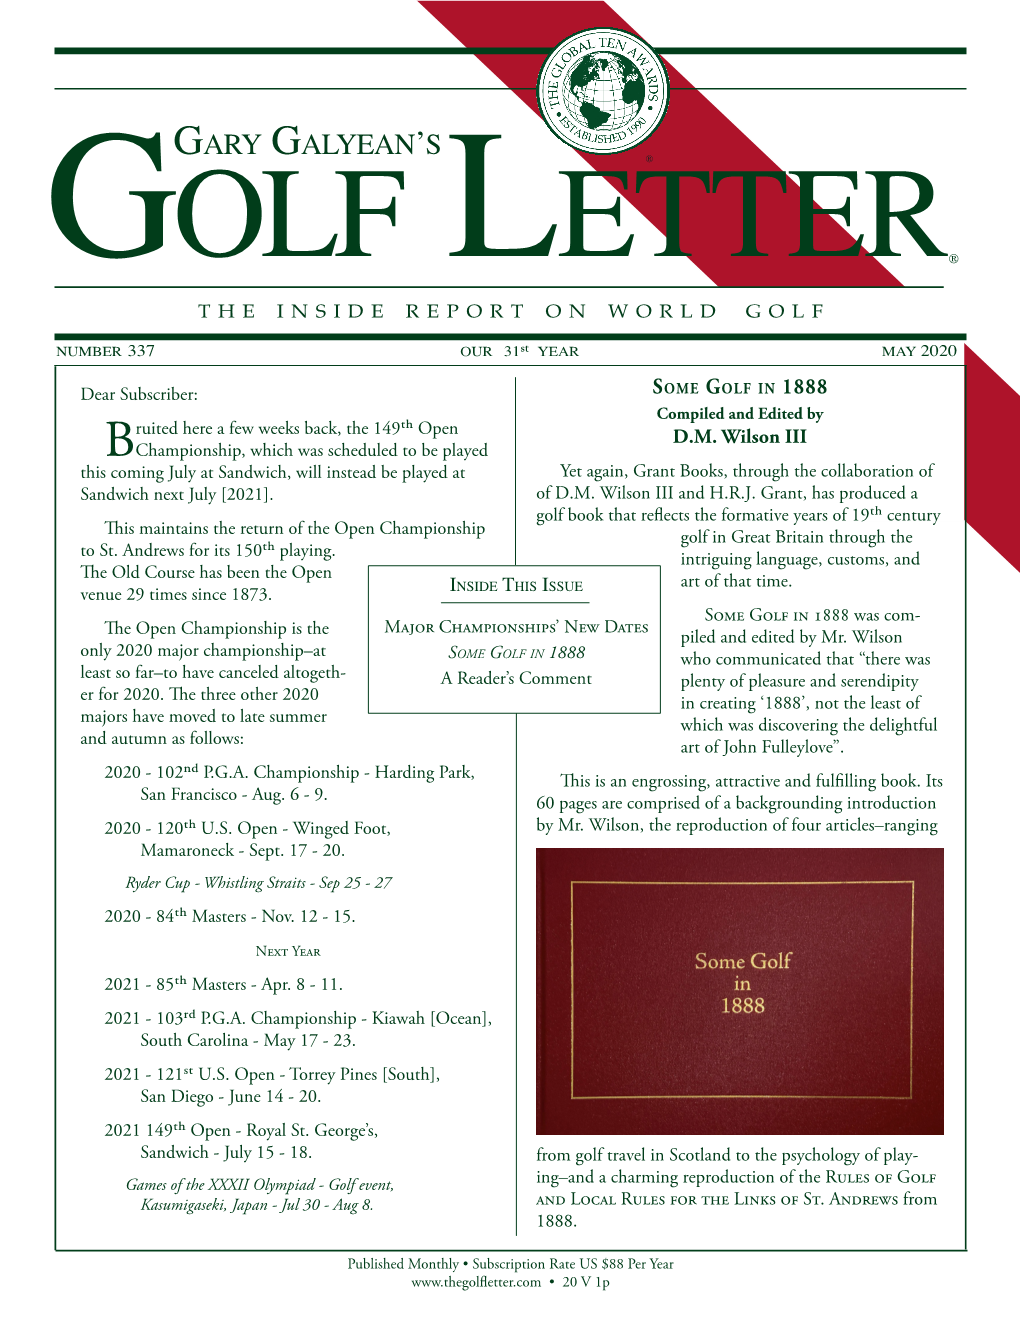 Gary Galyean's Golf Letter